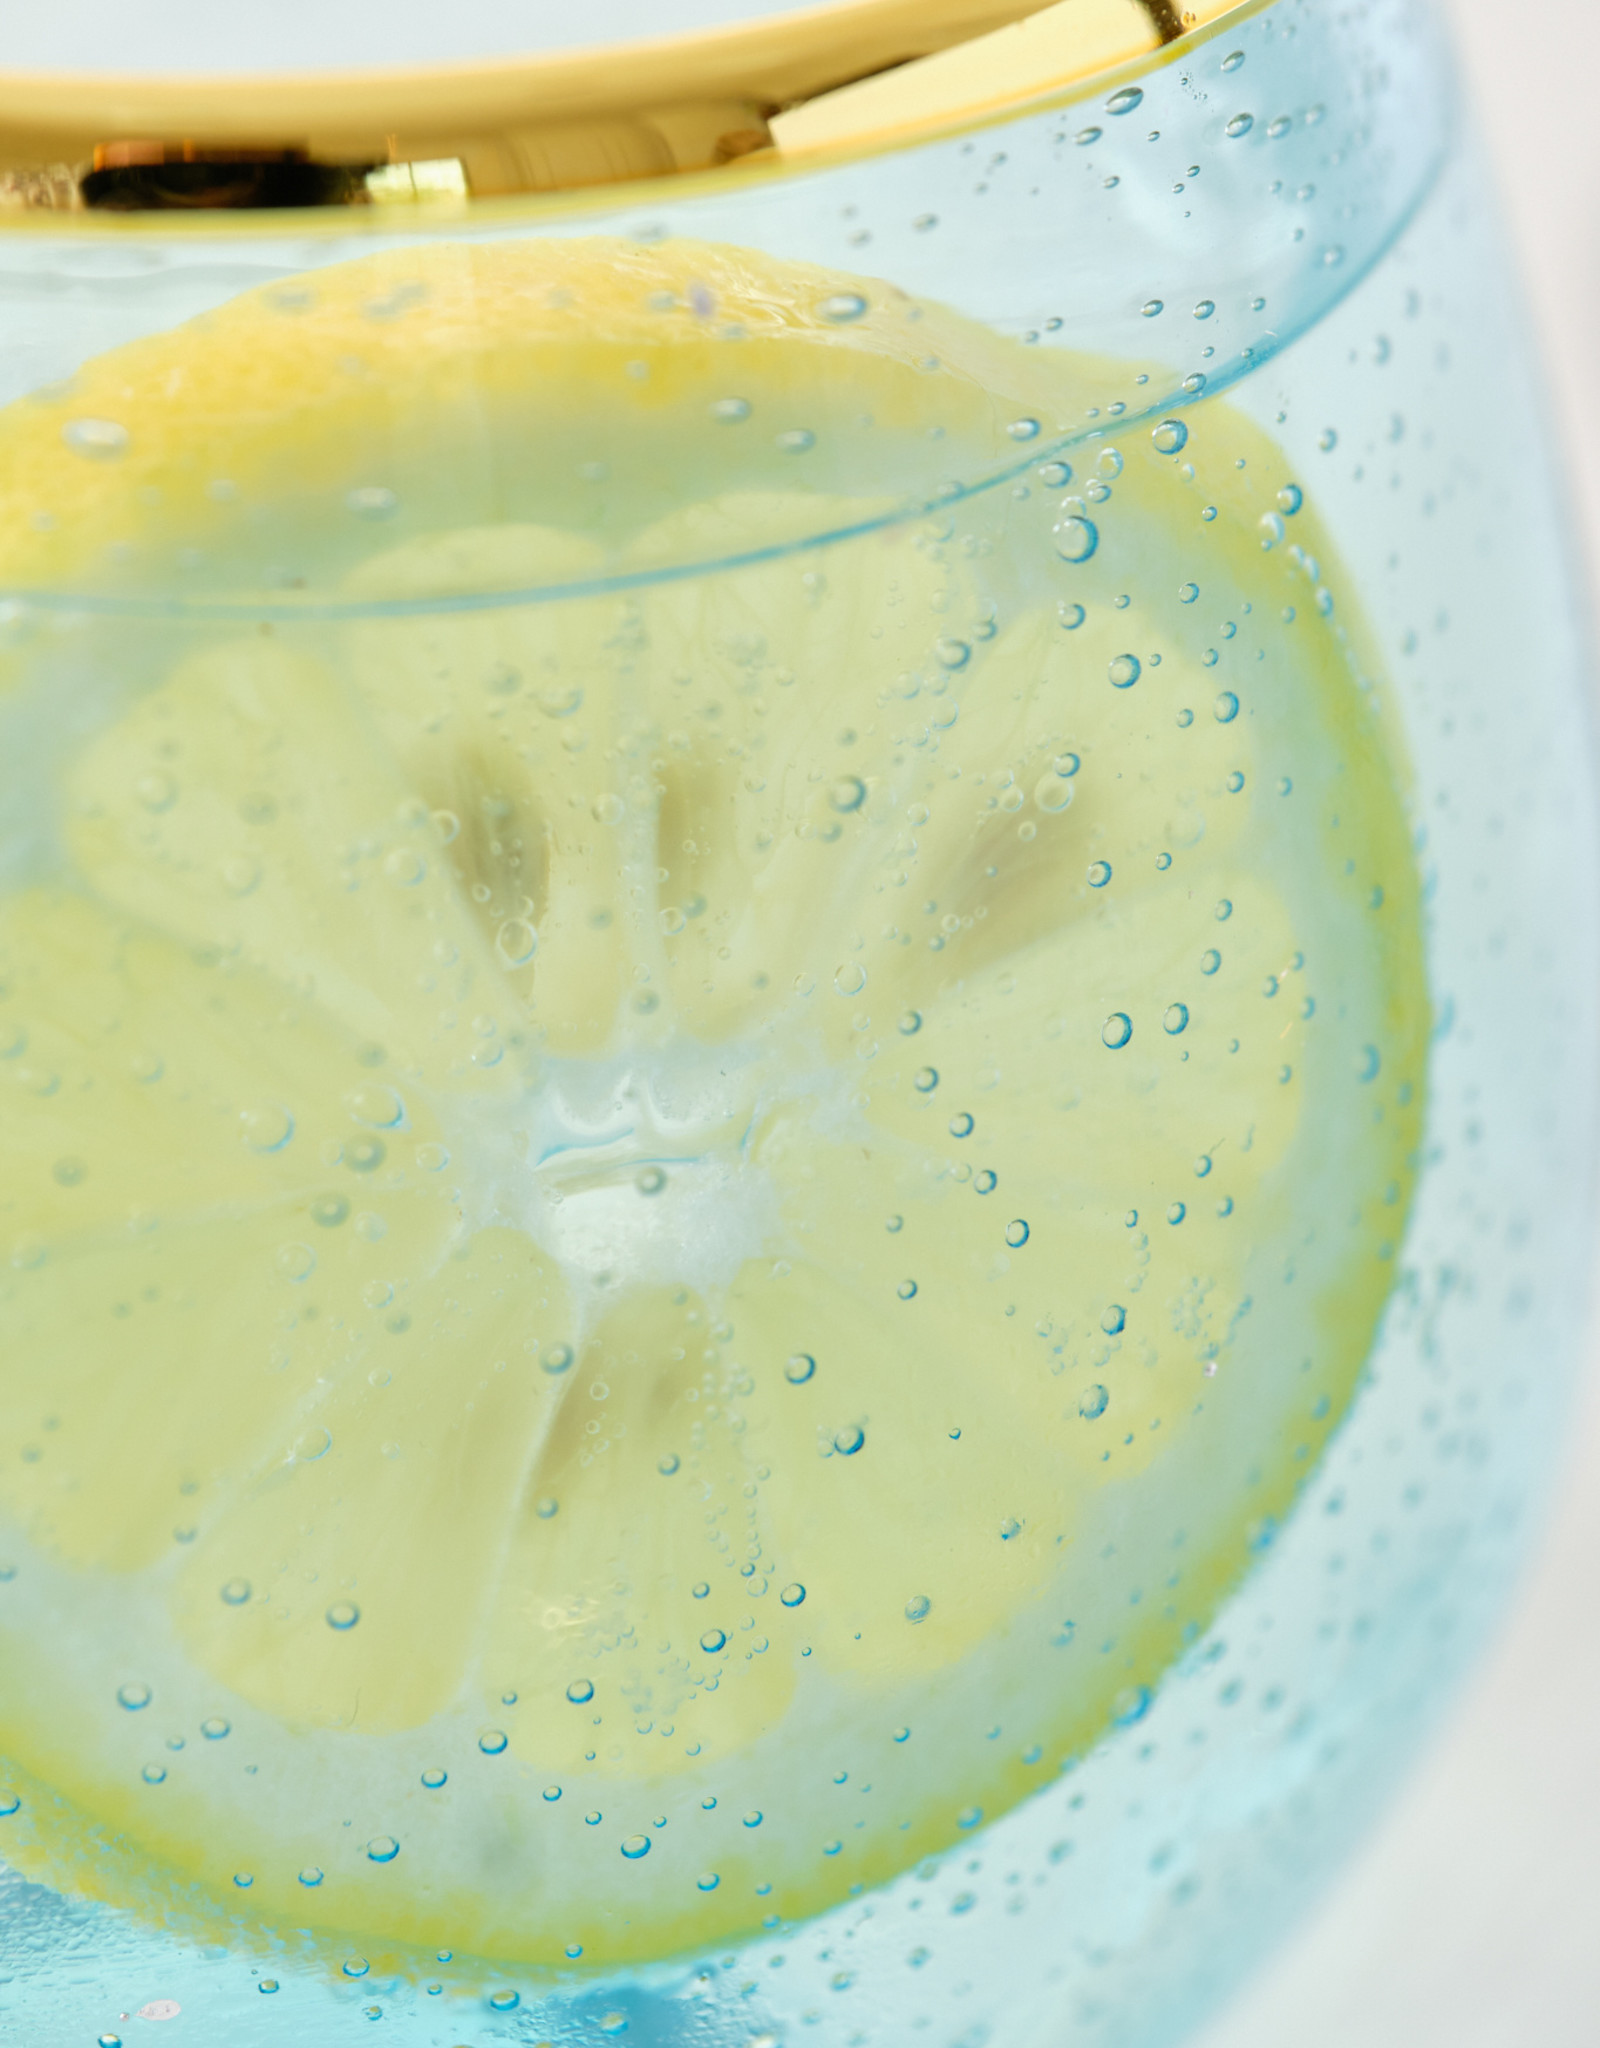 Aqua Bubble Stemless Wine Glass